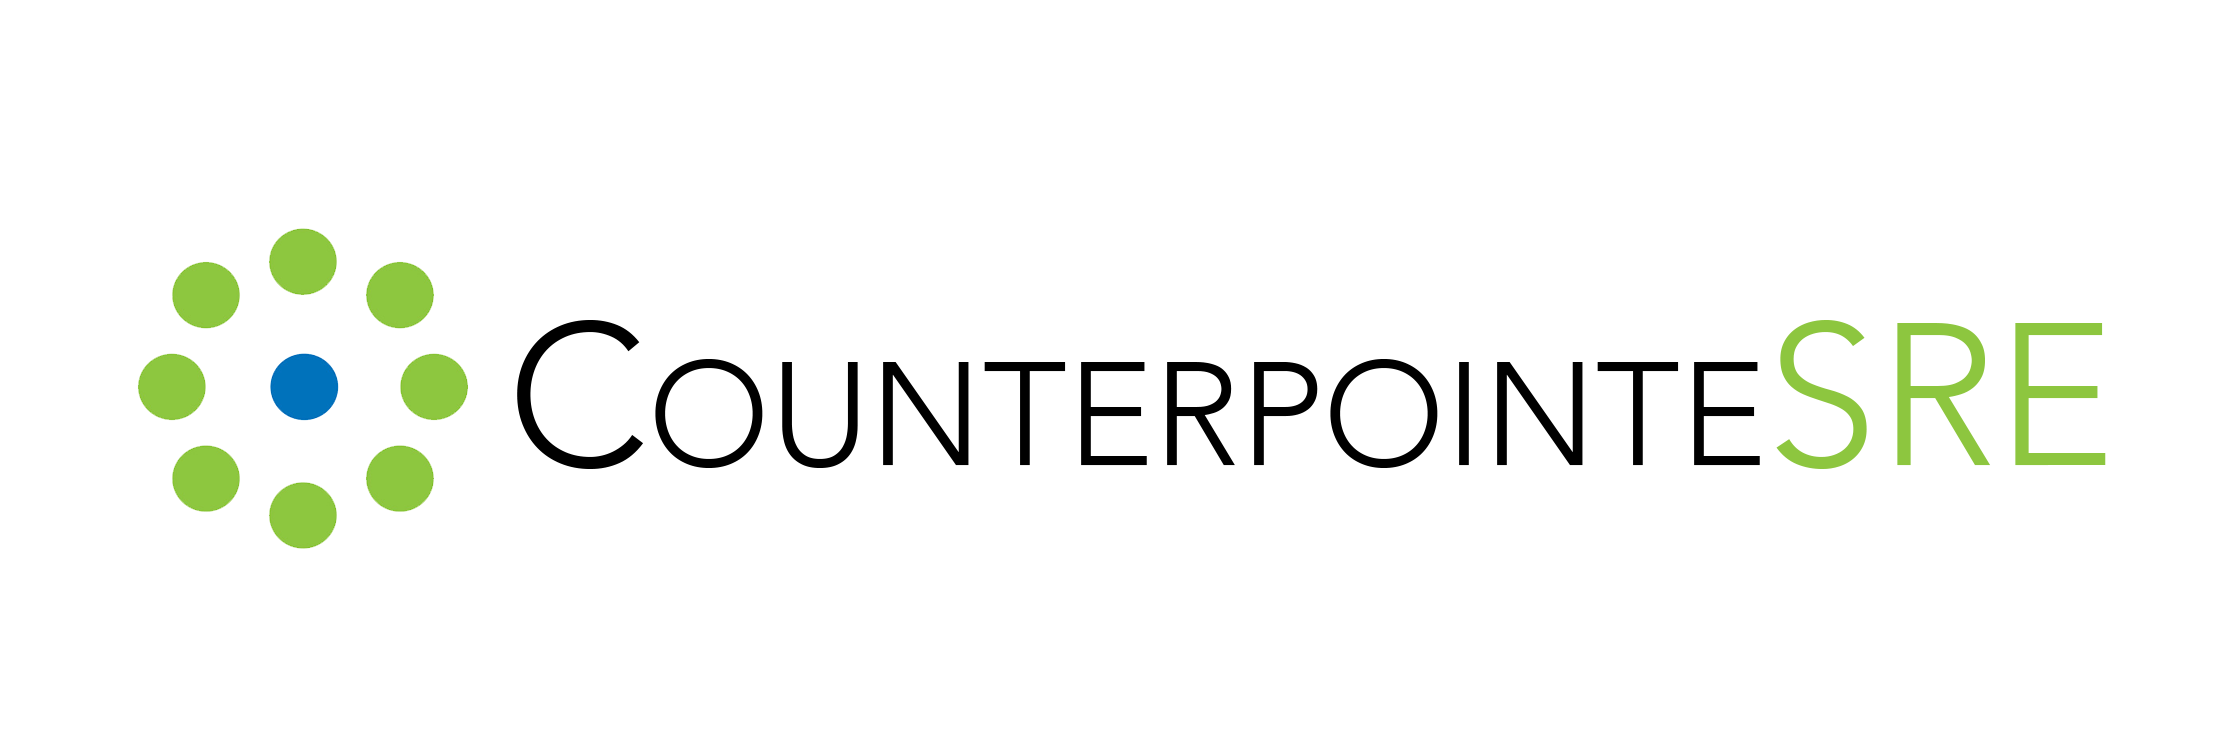 Counterpointe SRE Logo